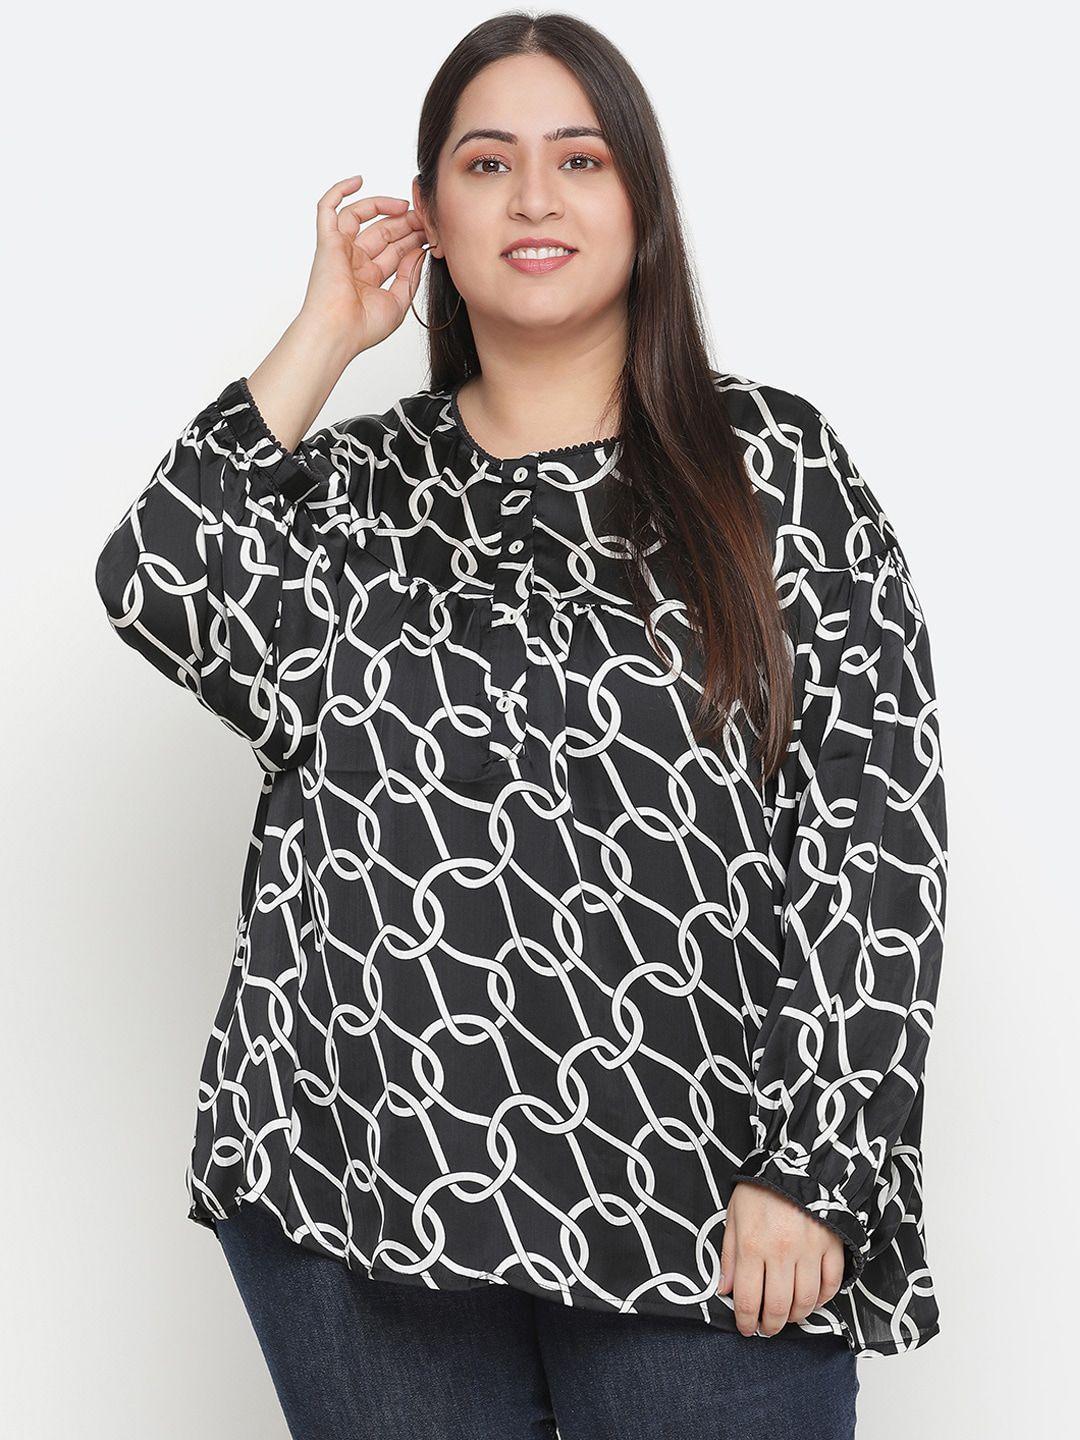 oxolloxo plus size black & white geometric print shirt style top